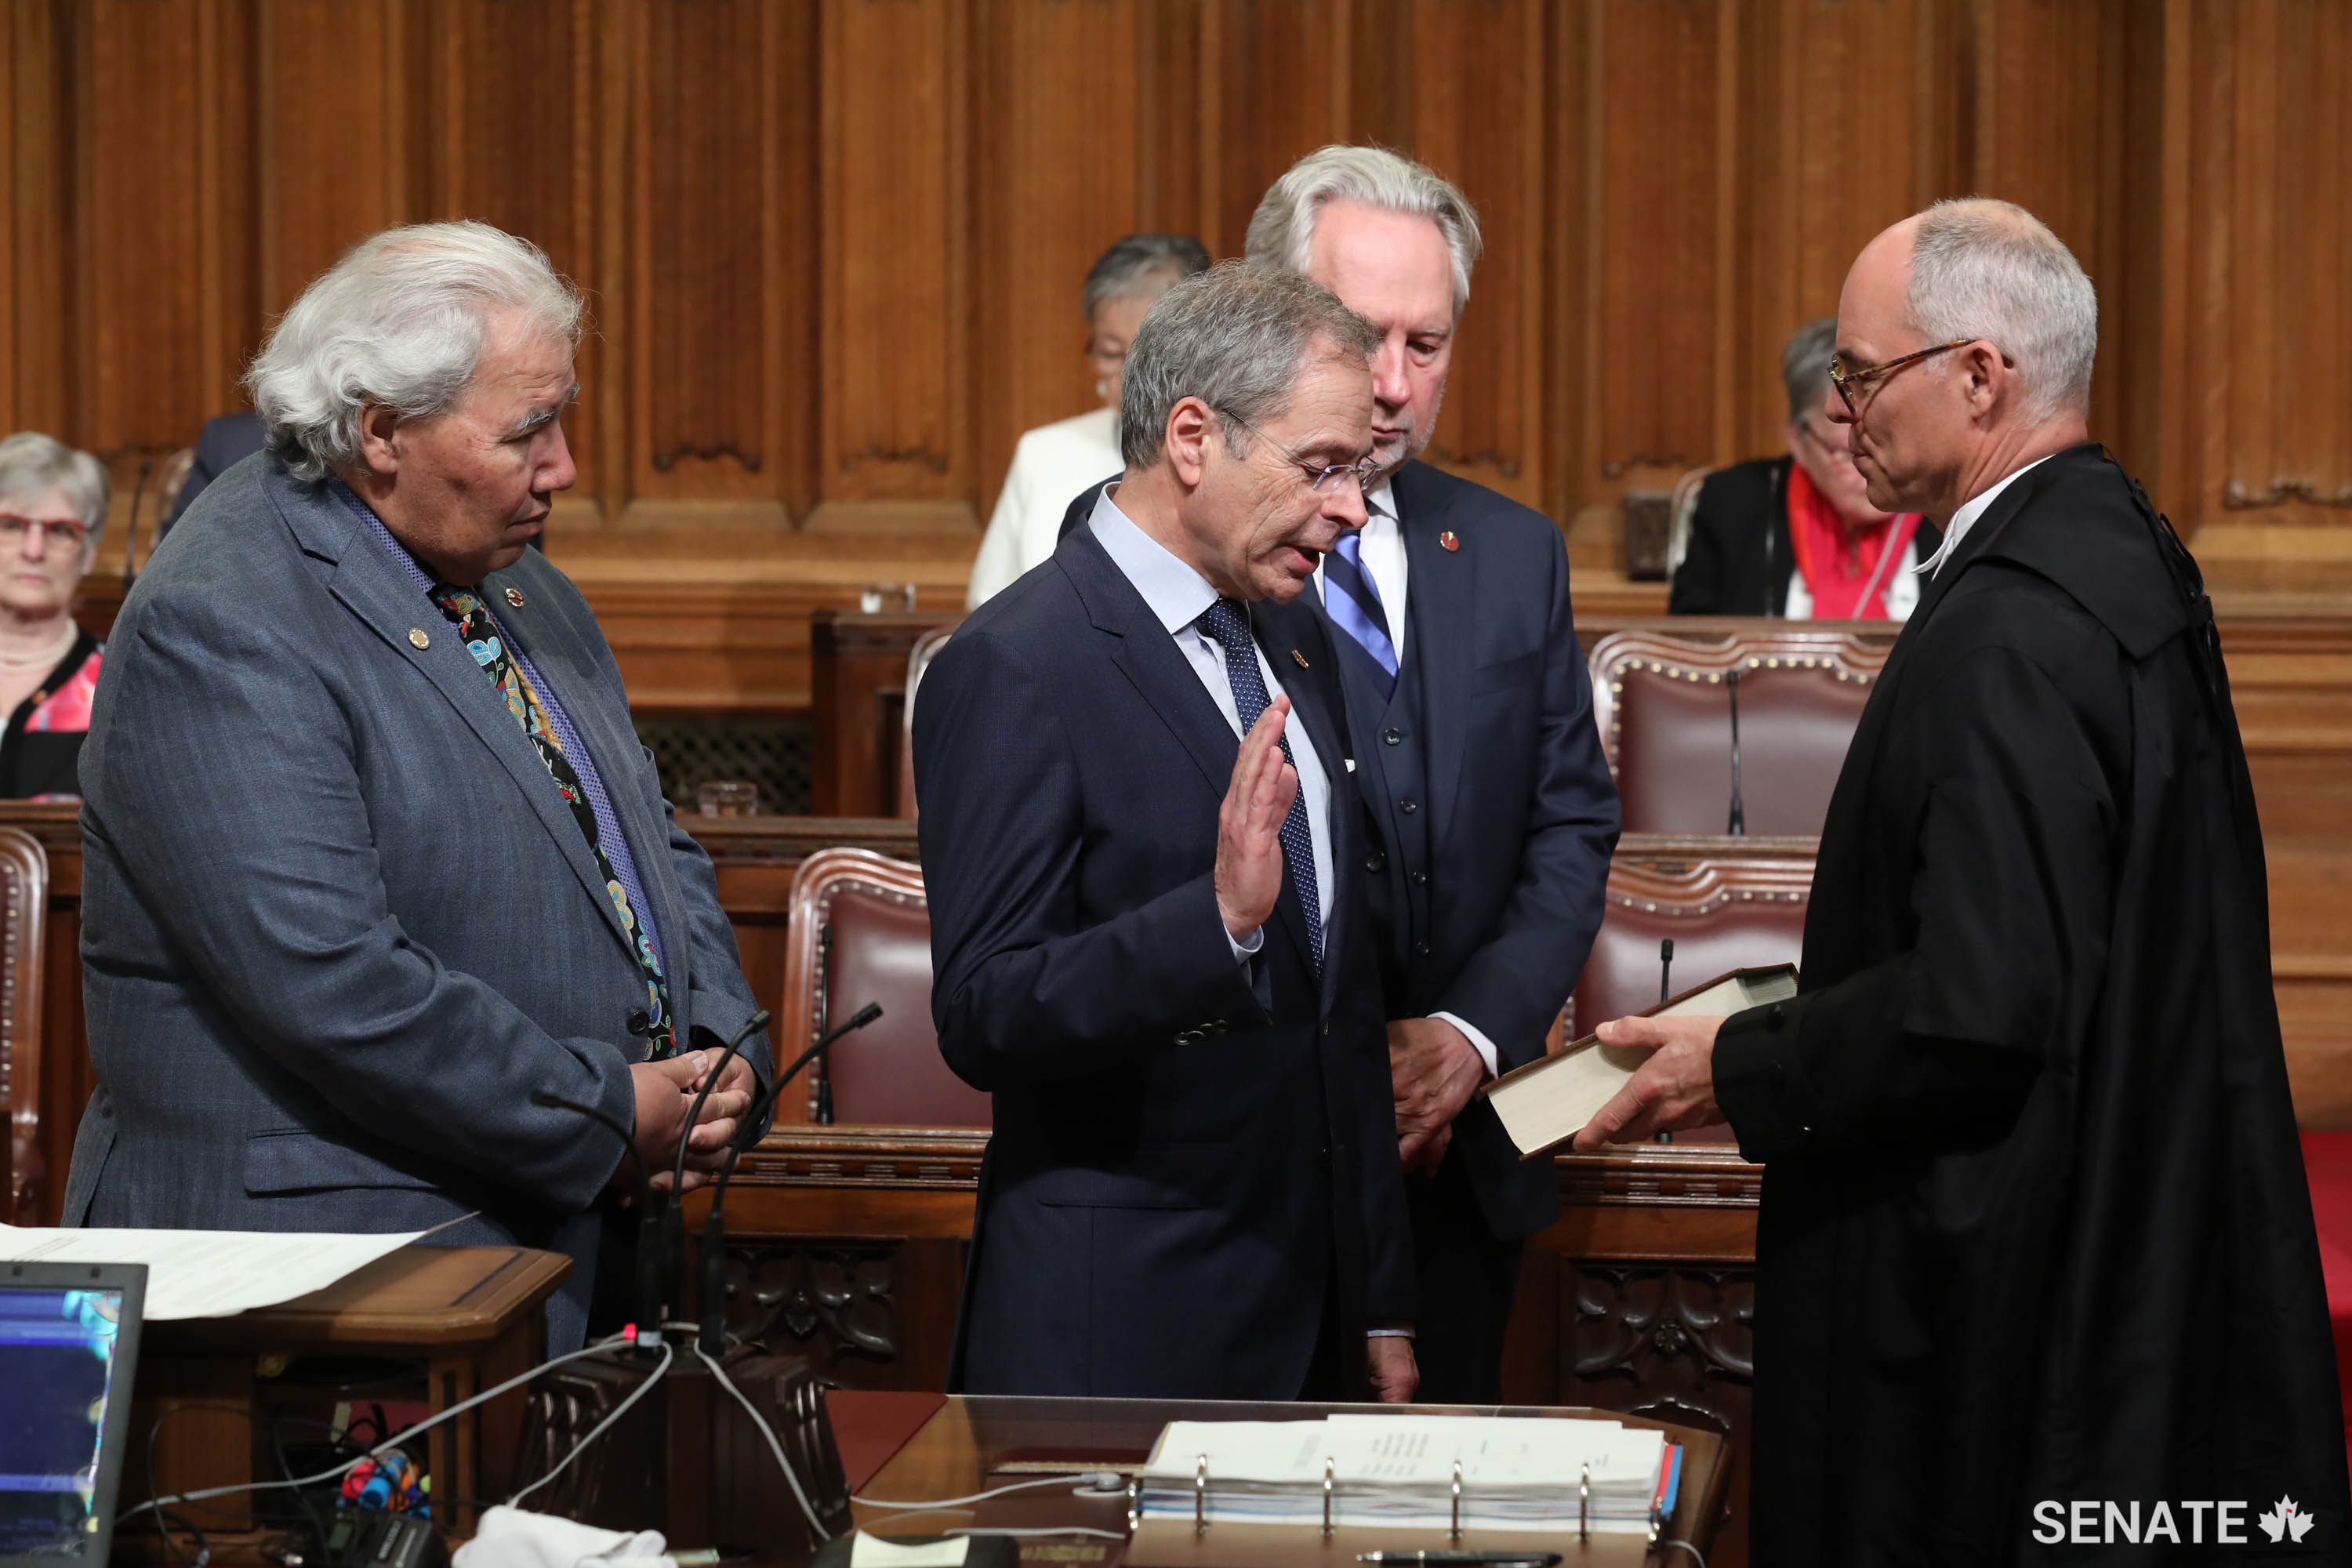 Senator Pierre Dalphond is sworn in by Clerk of the Senate Richard Denis on Thursday, June 7, 2018 as Senator Murray Sinclair, left, and Senator Peter Harder look on.